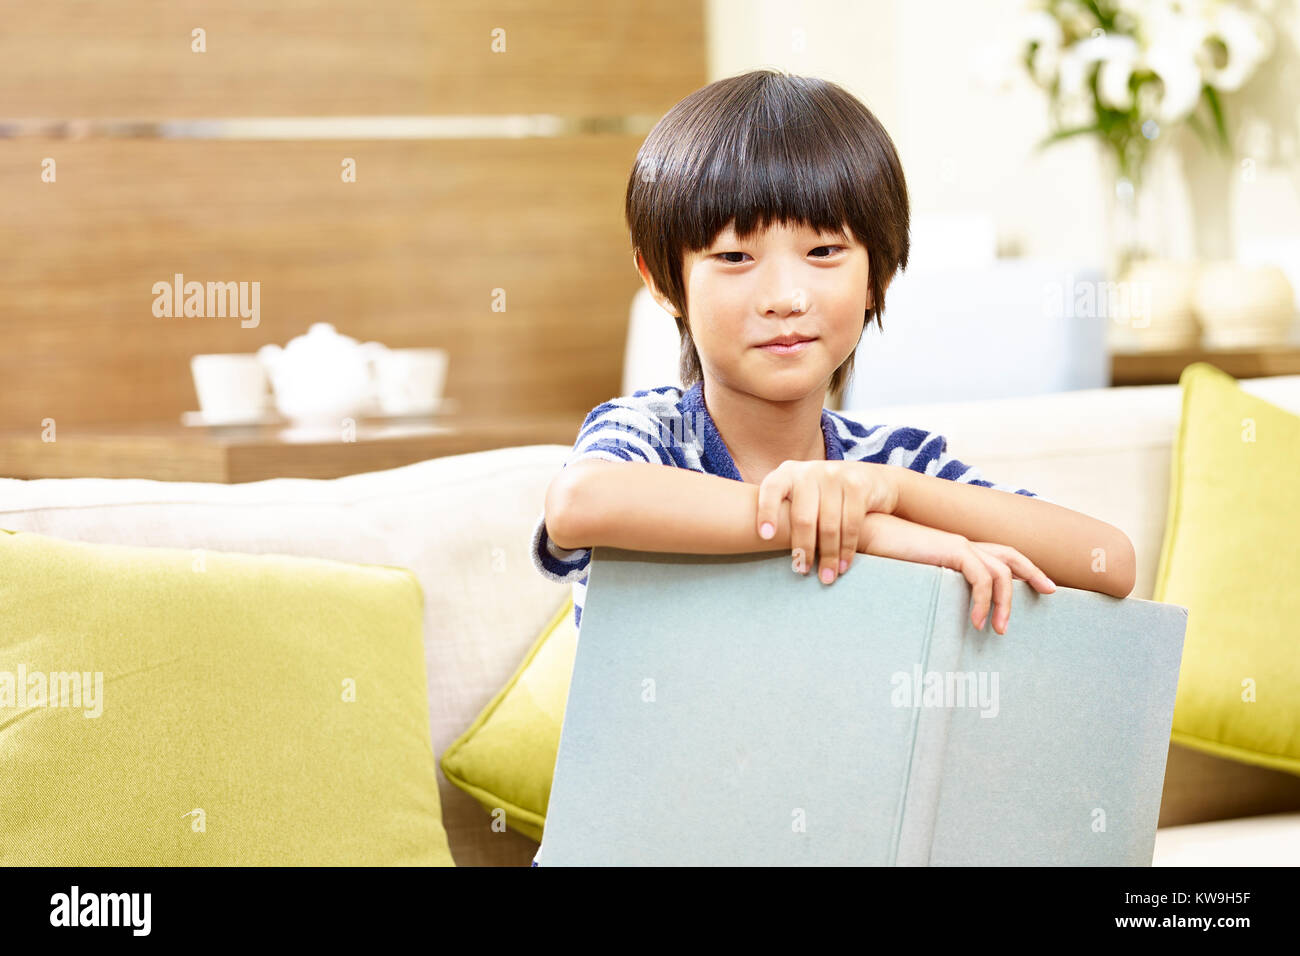 8 ans de la petite asie boy sitting on sofa holding a book looking at camera de sourire. Banque D'Images